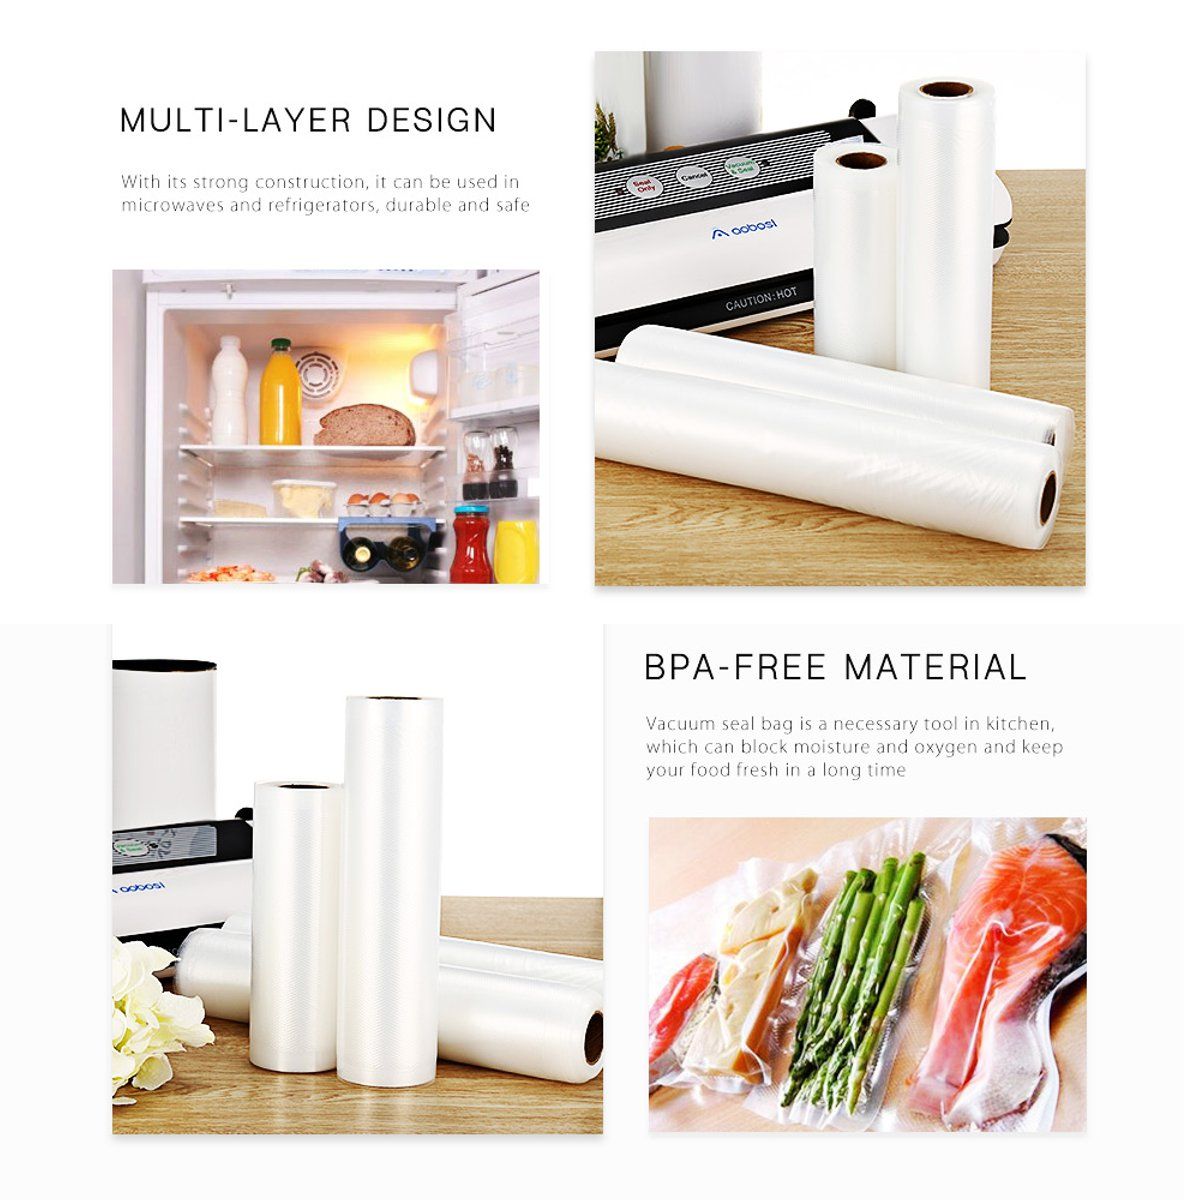 28x500cm-Food-Vacuum-Seal-Bag-Roll-Fresh-Packaging-Storage-Saver-Pouch-1574797